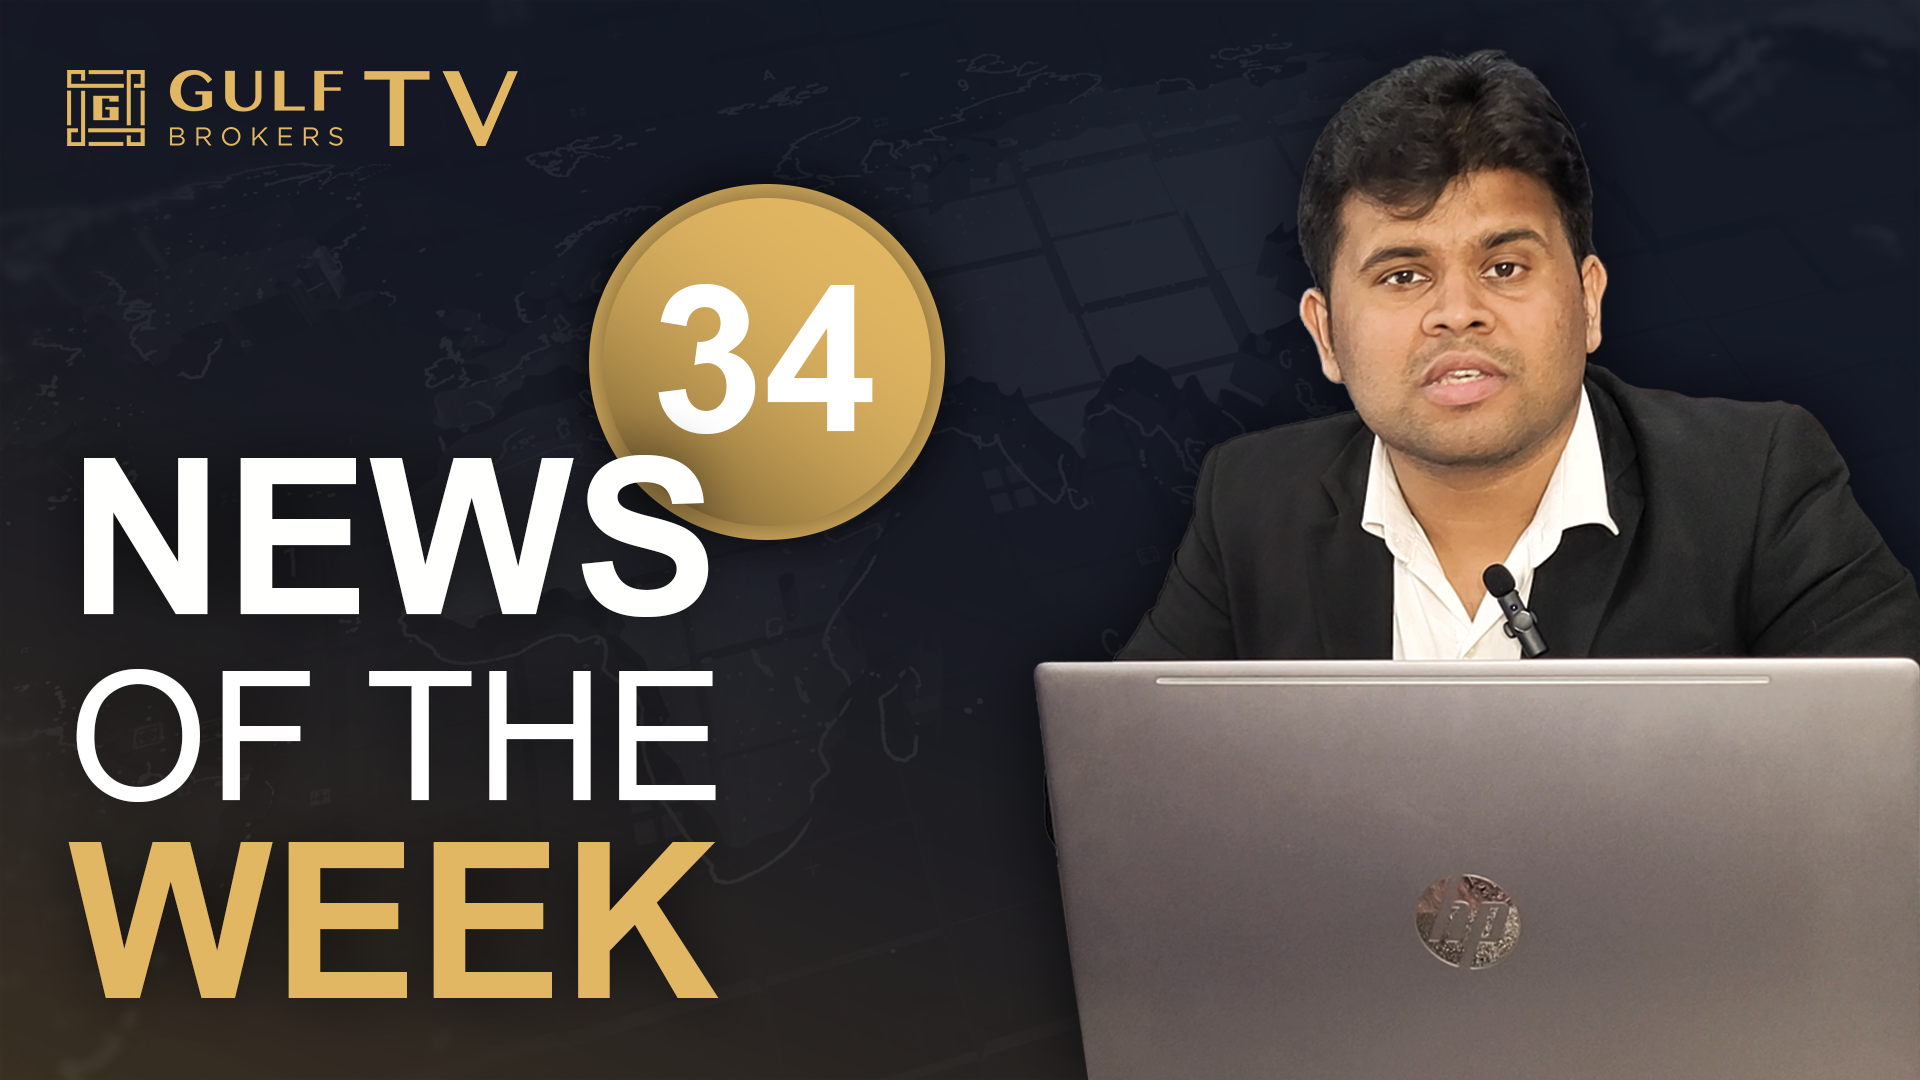 Gulfbrokers | Gulf Brokers | News of the week 34 | Syam KP